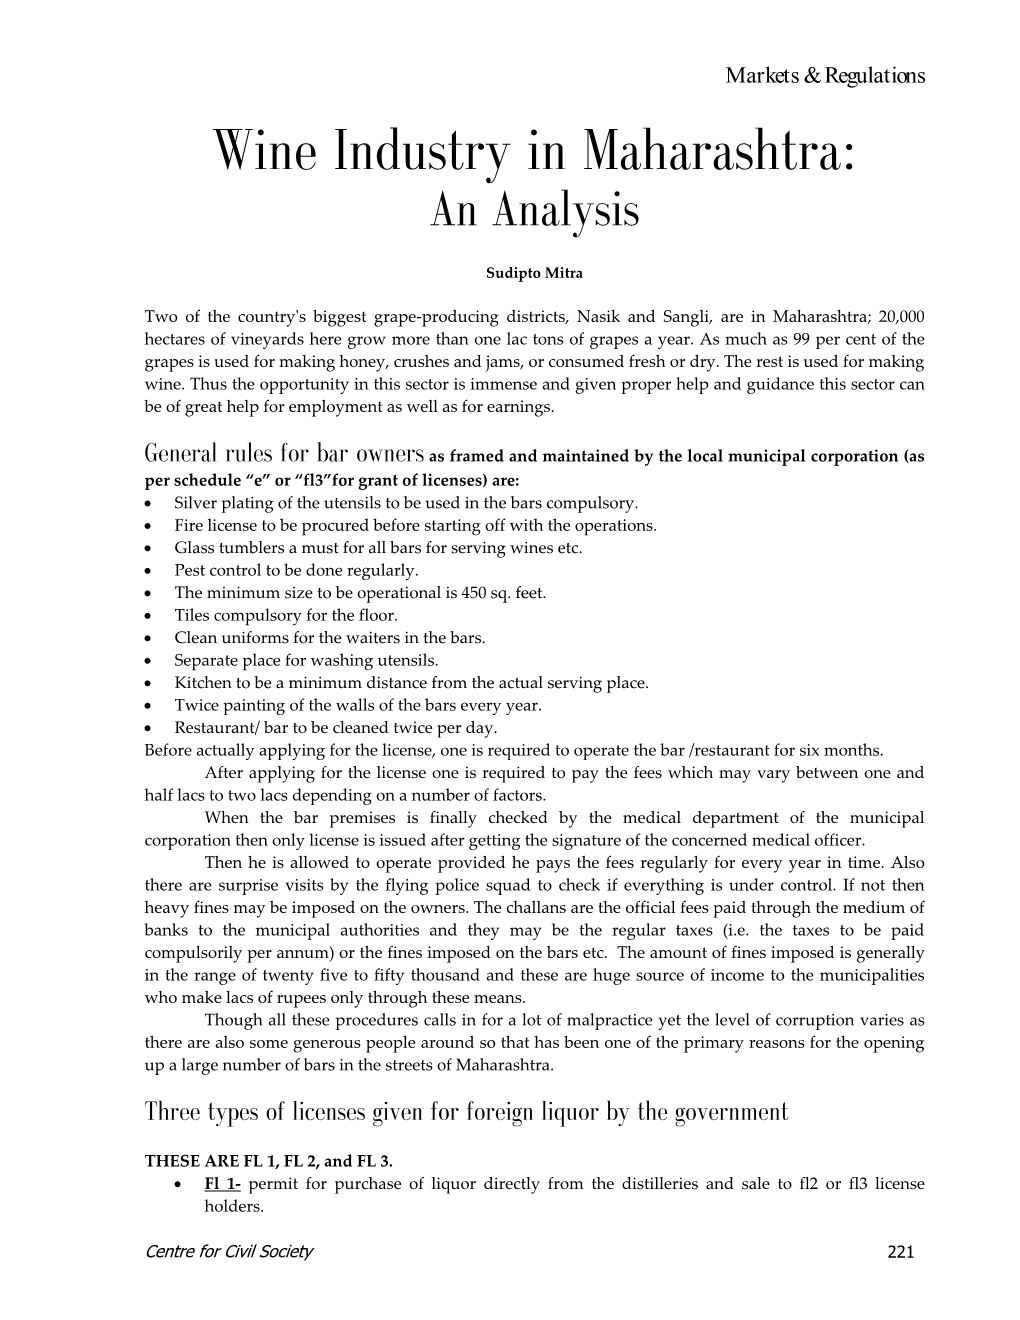 Wine Industry in Maharashtra: an Analysis